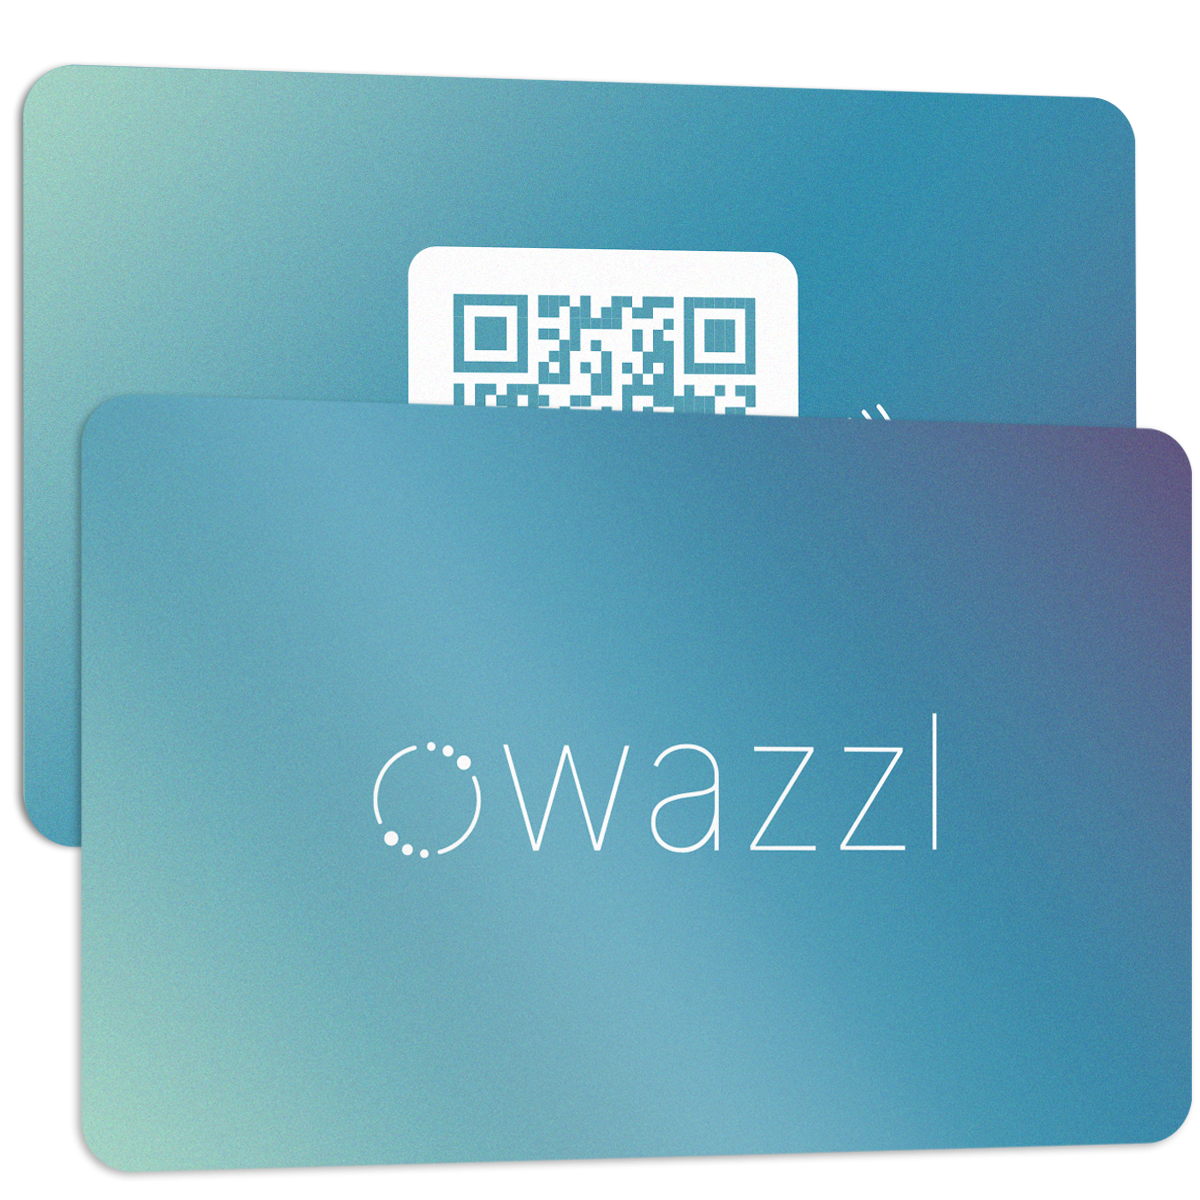 Smartcard - Digital business card